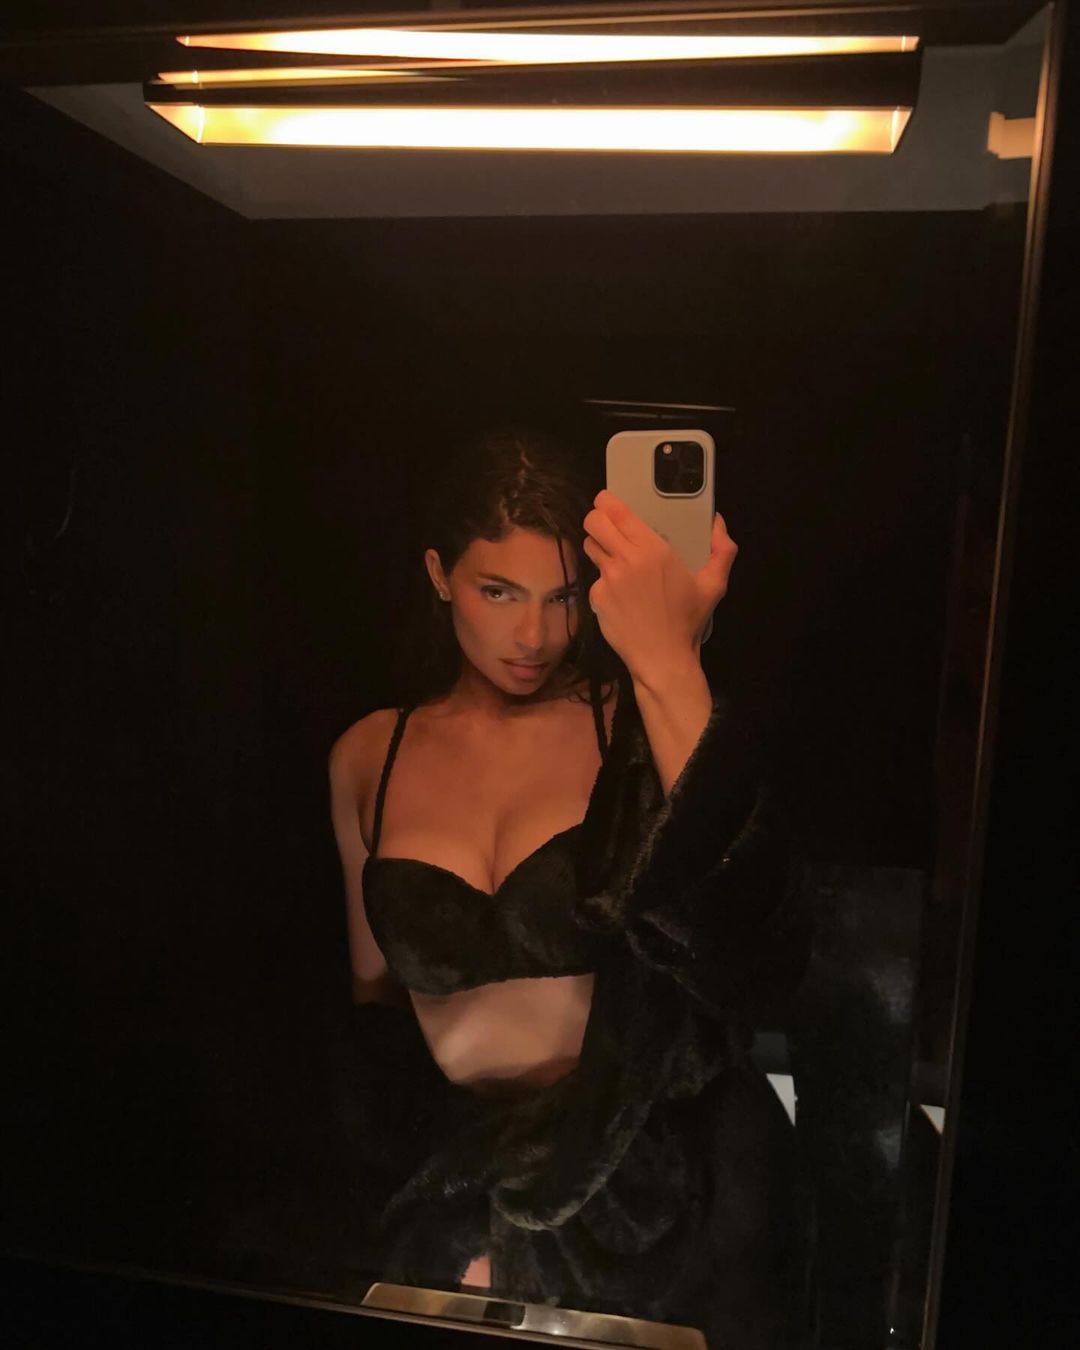 On Saturday, Kylie showed off her slim waist in a black velvet bra and high-slit skirt for a mirror selfie before a stroll around Paris